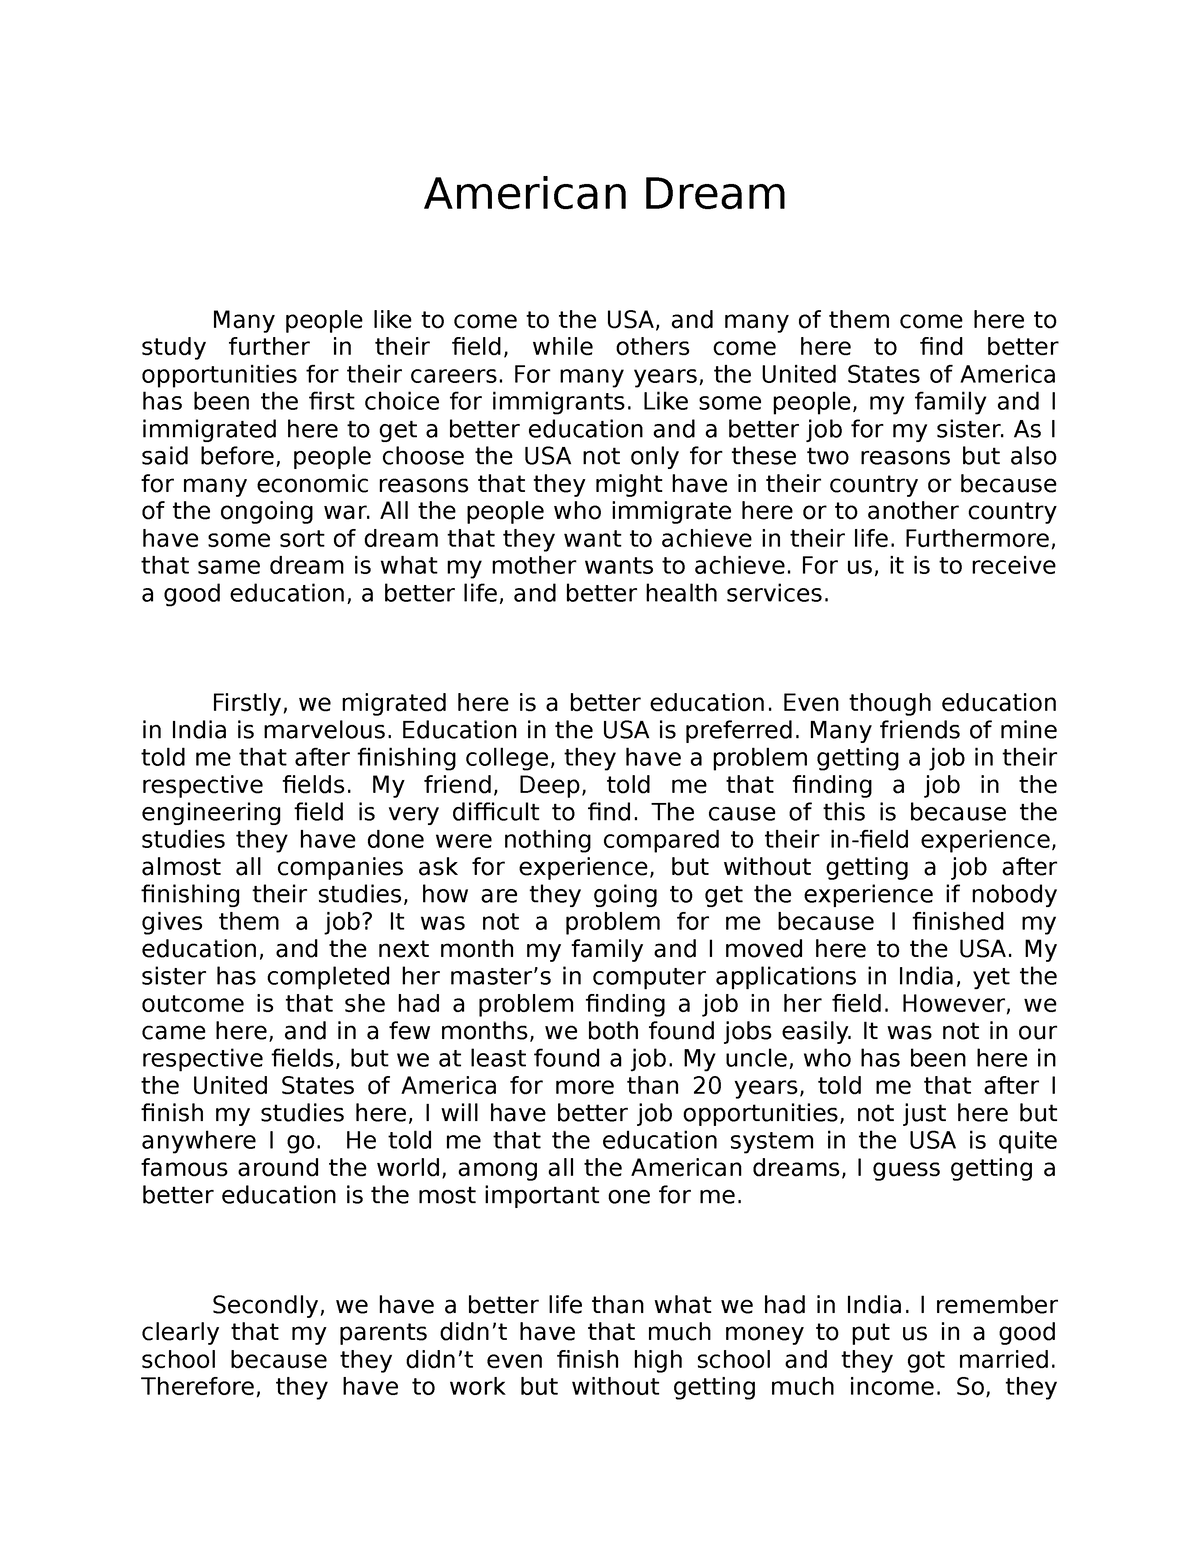 american dream essay introduction